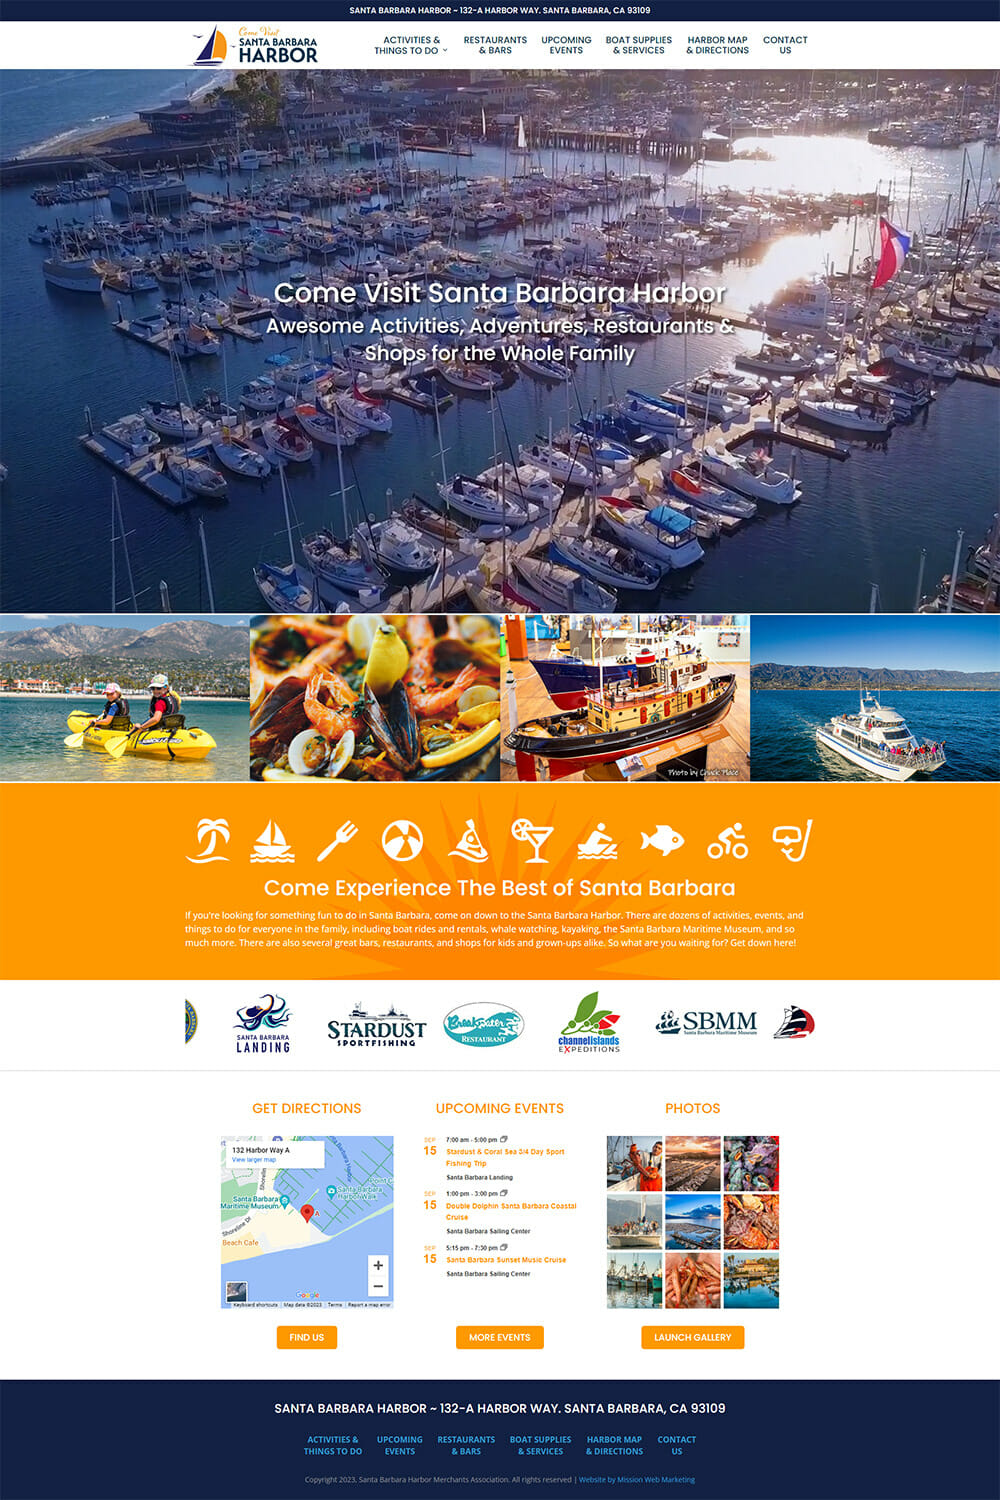 Santa Barbara Maritime Museum Website